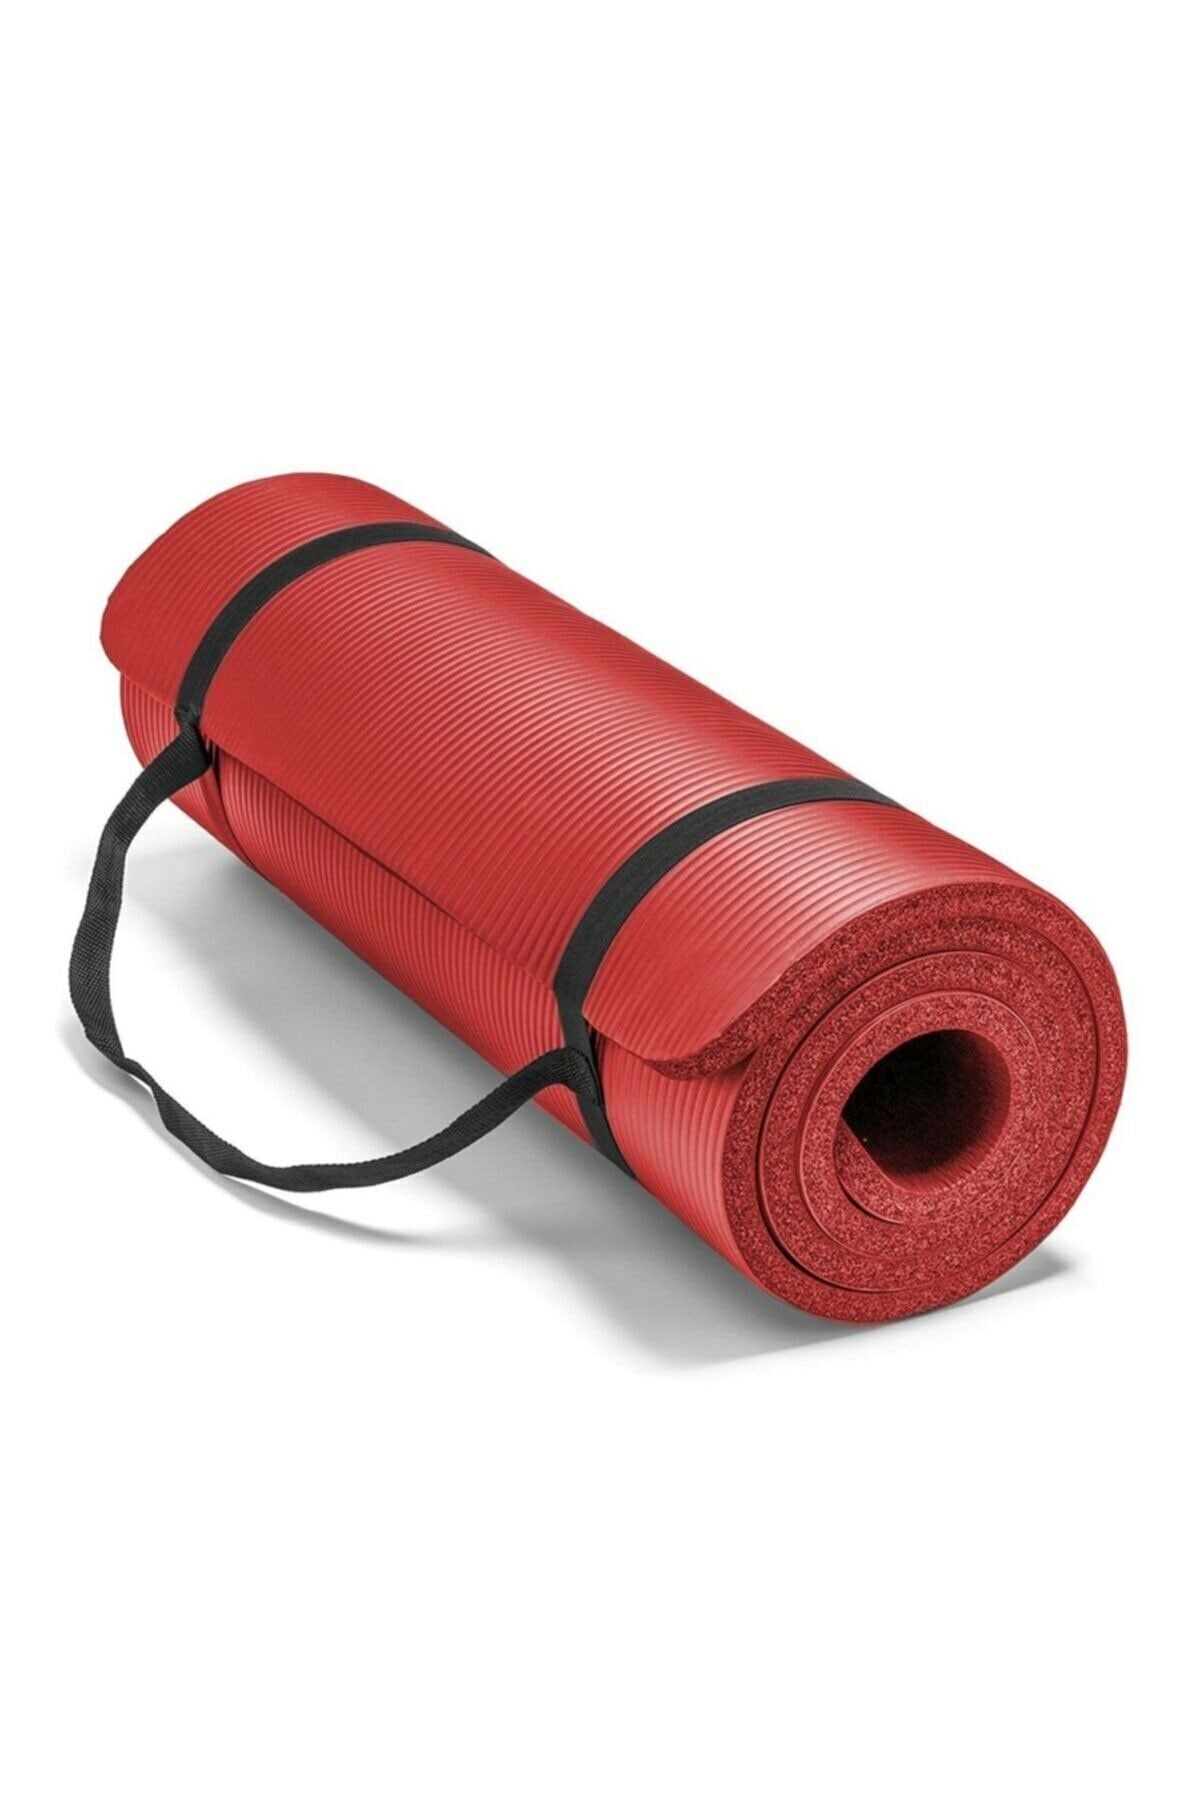 Povit Plates Yoga Egzersiz Minderi 10 Mm.renk Seçenekli